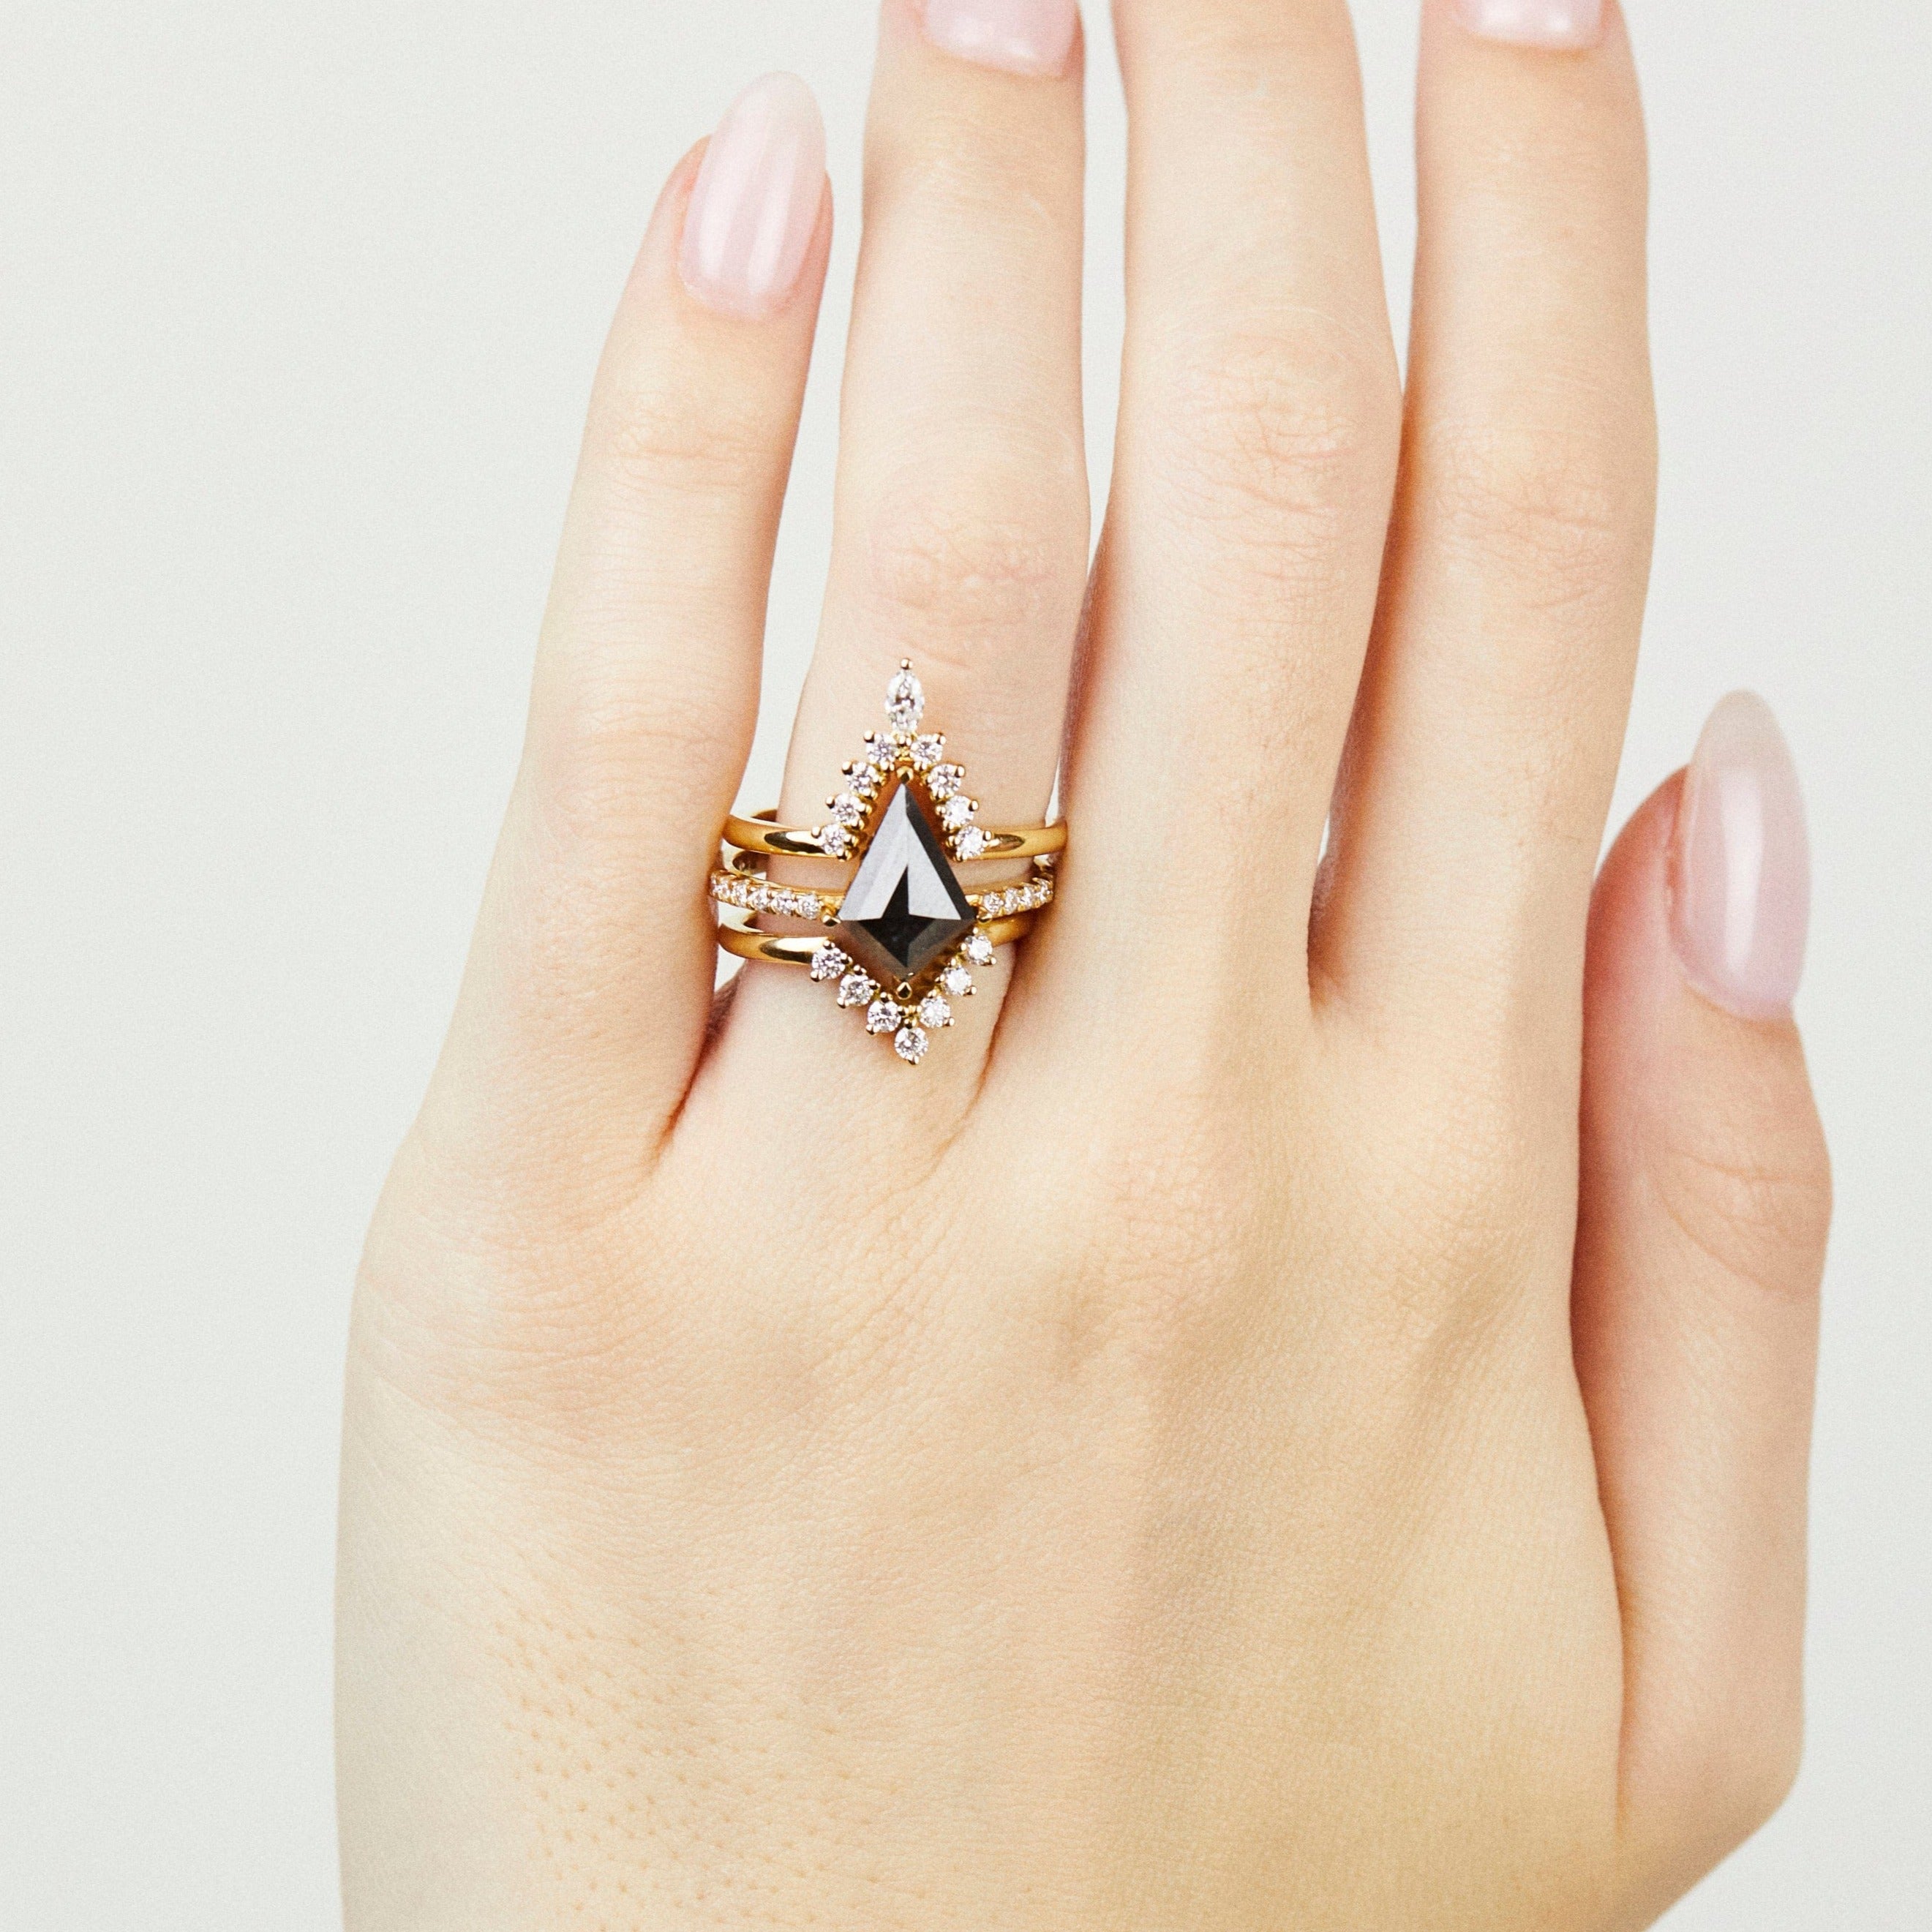 Sophia Perez Jewellery Engagement Ring 1.79ct Kite Salt and Pepper Diamond Engagement Ring, Athena Setting